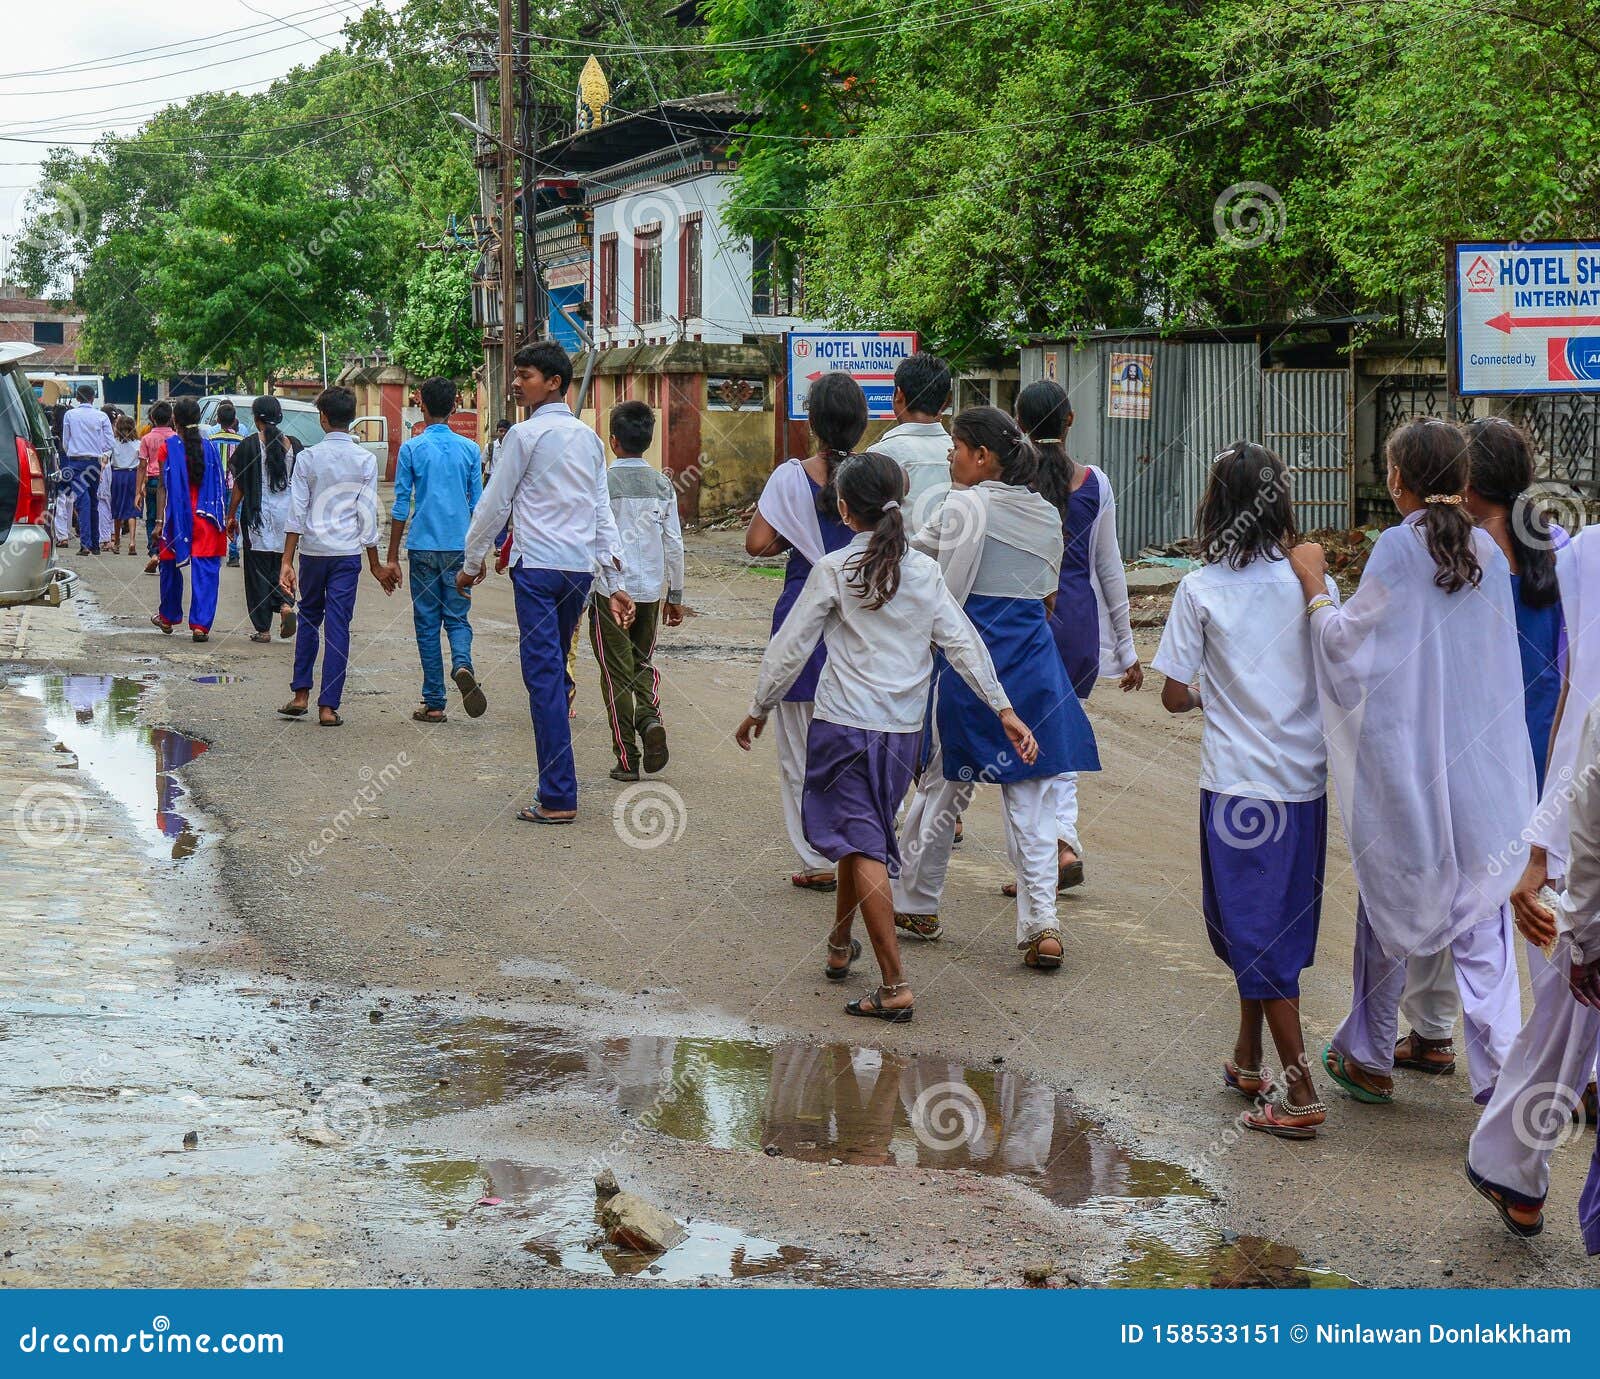 Highschool students walking on road. Bodhgaya, India - July 9, 2015. Highschool students walking on rural road in Bodhgaya, India. Bodh Gaya is the most revered of all Buddhist sacred sites